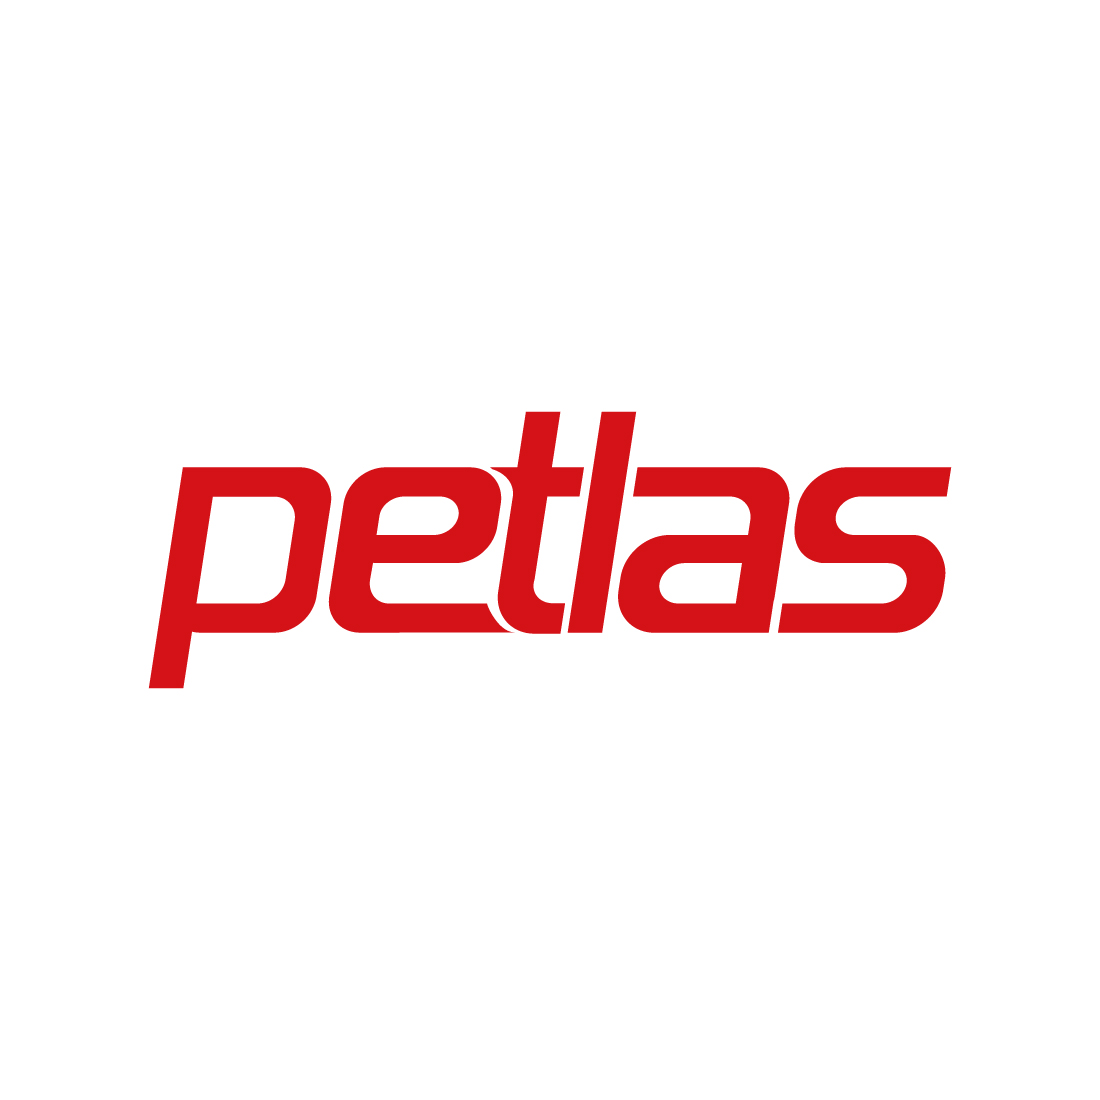 8.5/17.5 Petlas Rz300 post - 